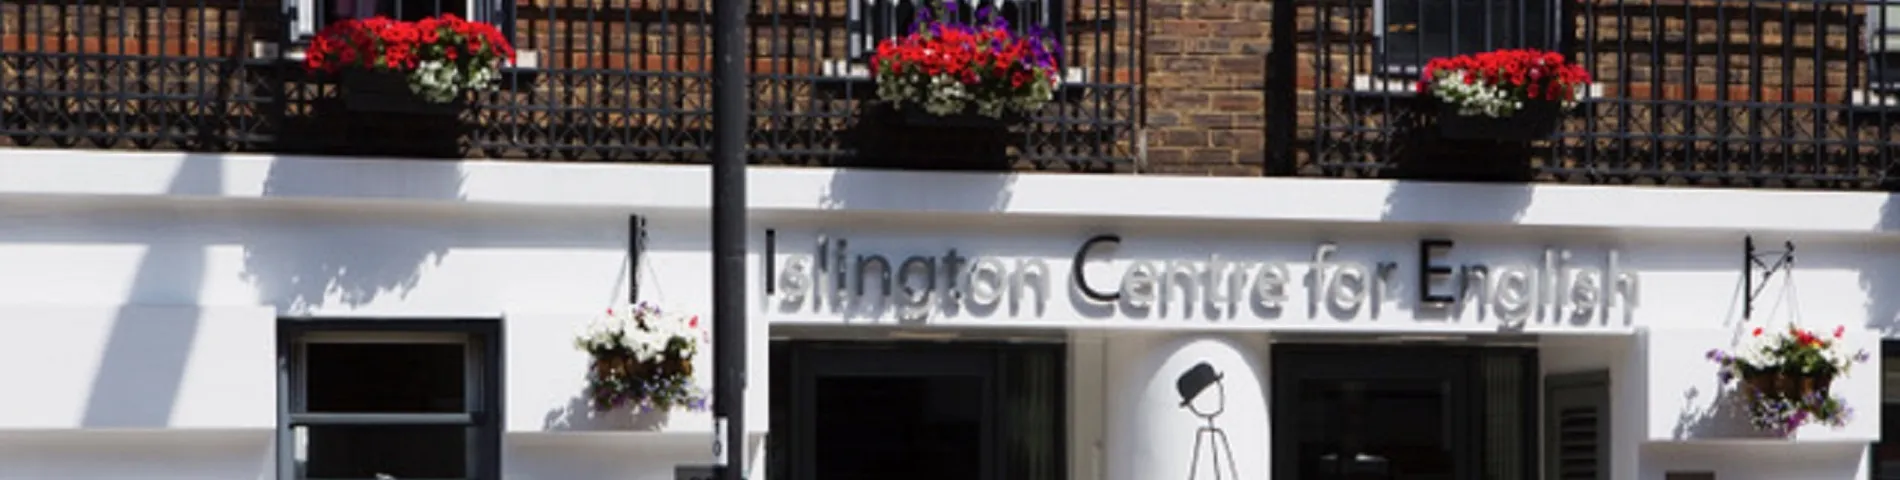 Islington Centre for English画像1